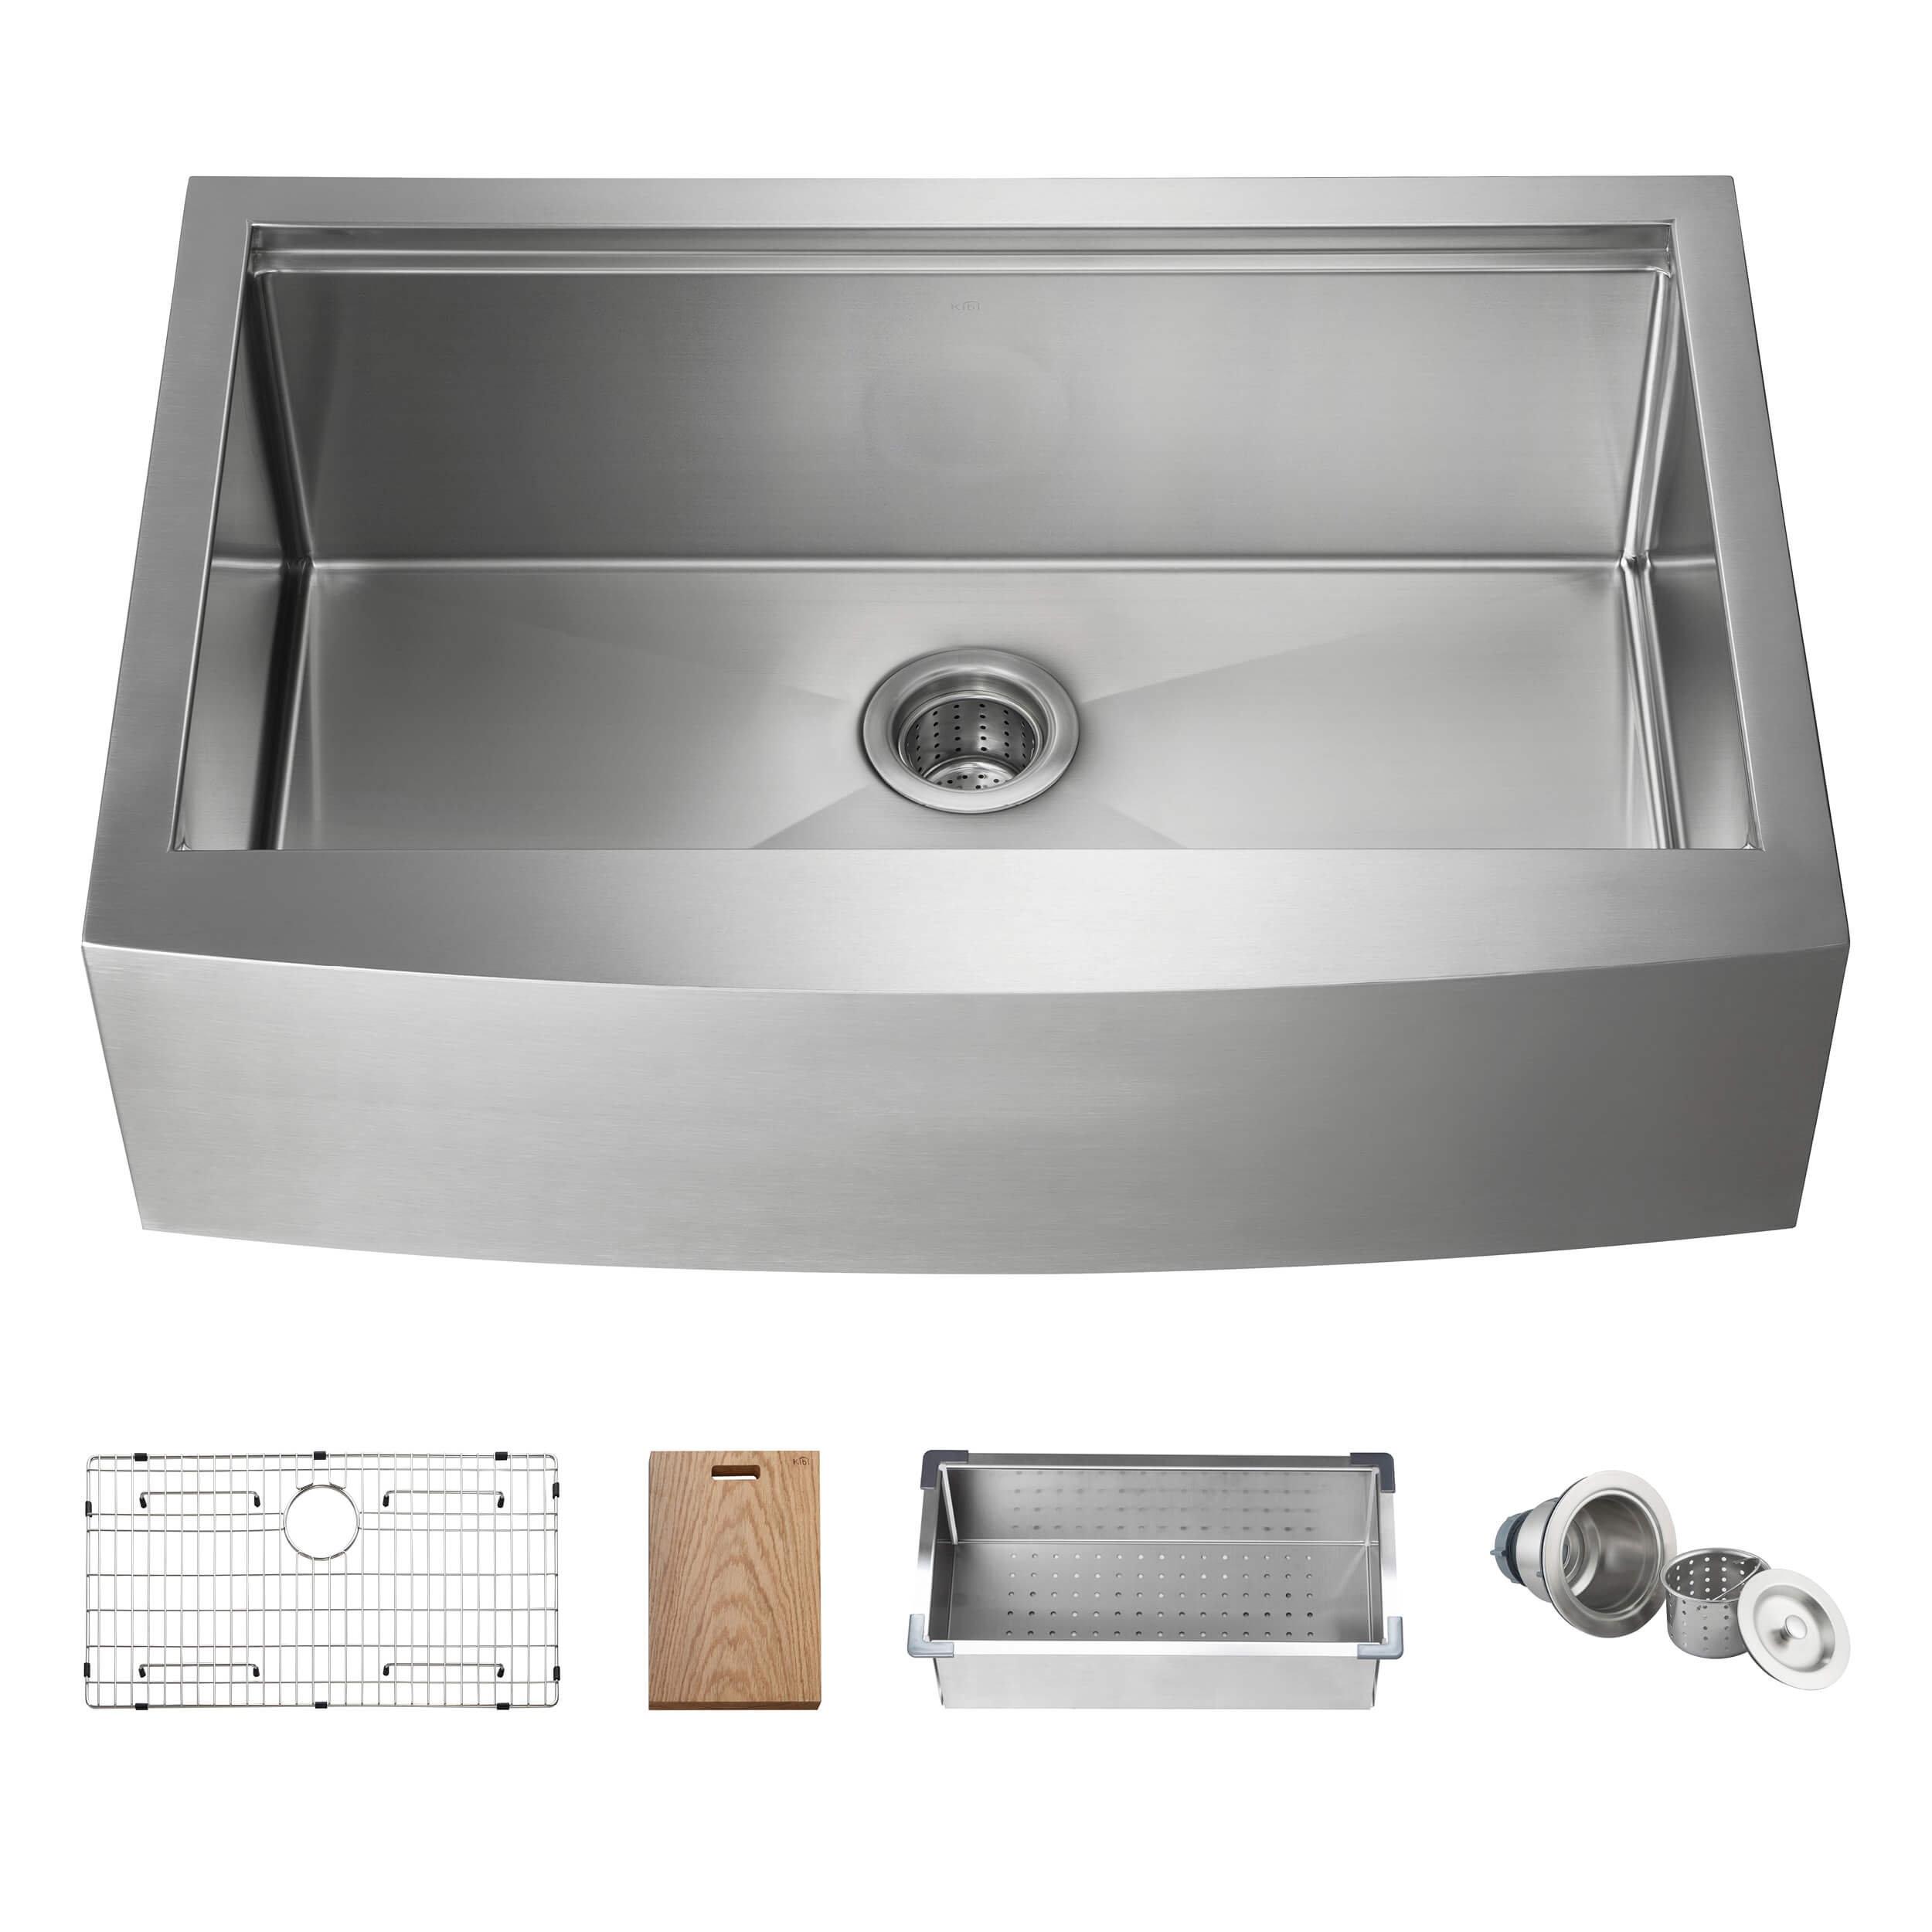 https://visualhunt.com/photos/23/kibi-22-w-single-bowl-stainless-steel-farmhouse-kitchen-sink.jpg